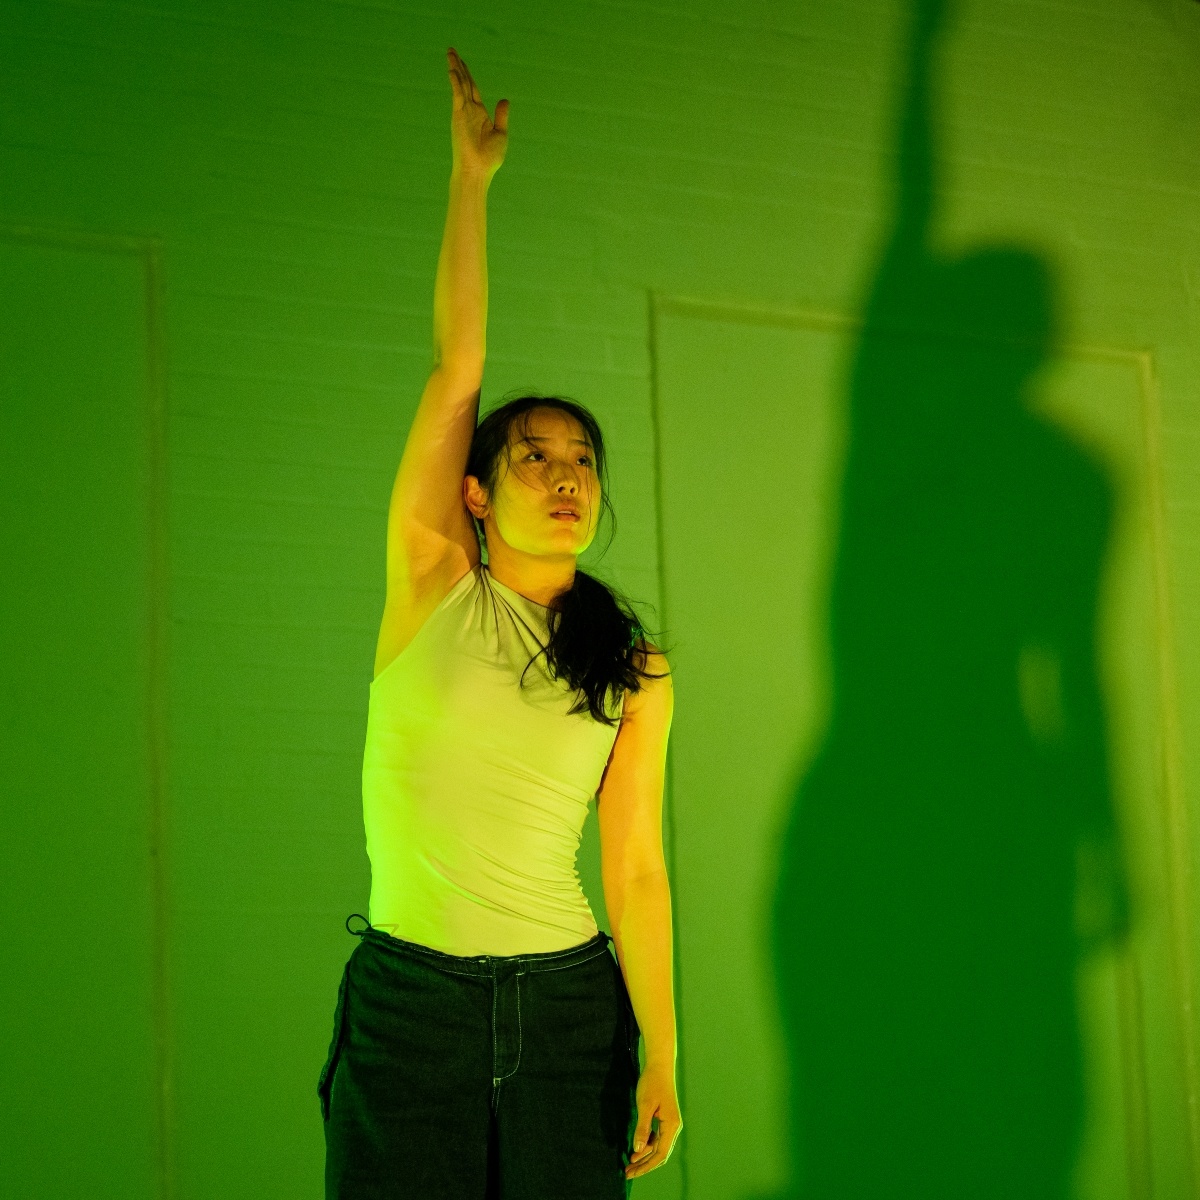 Dancer in green lit room 